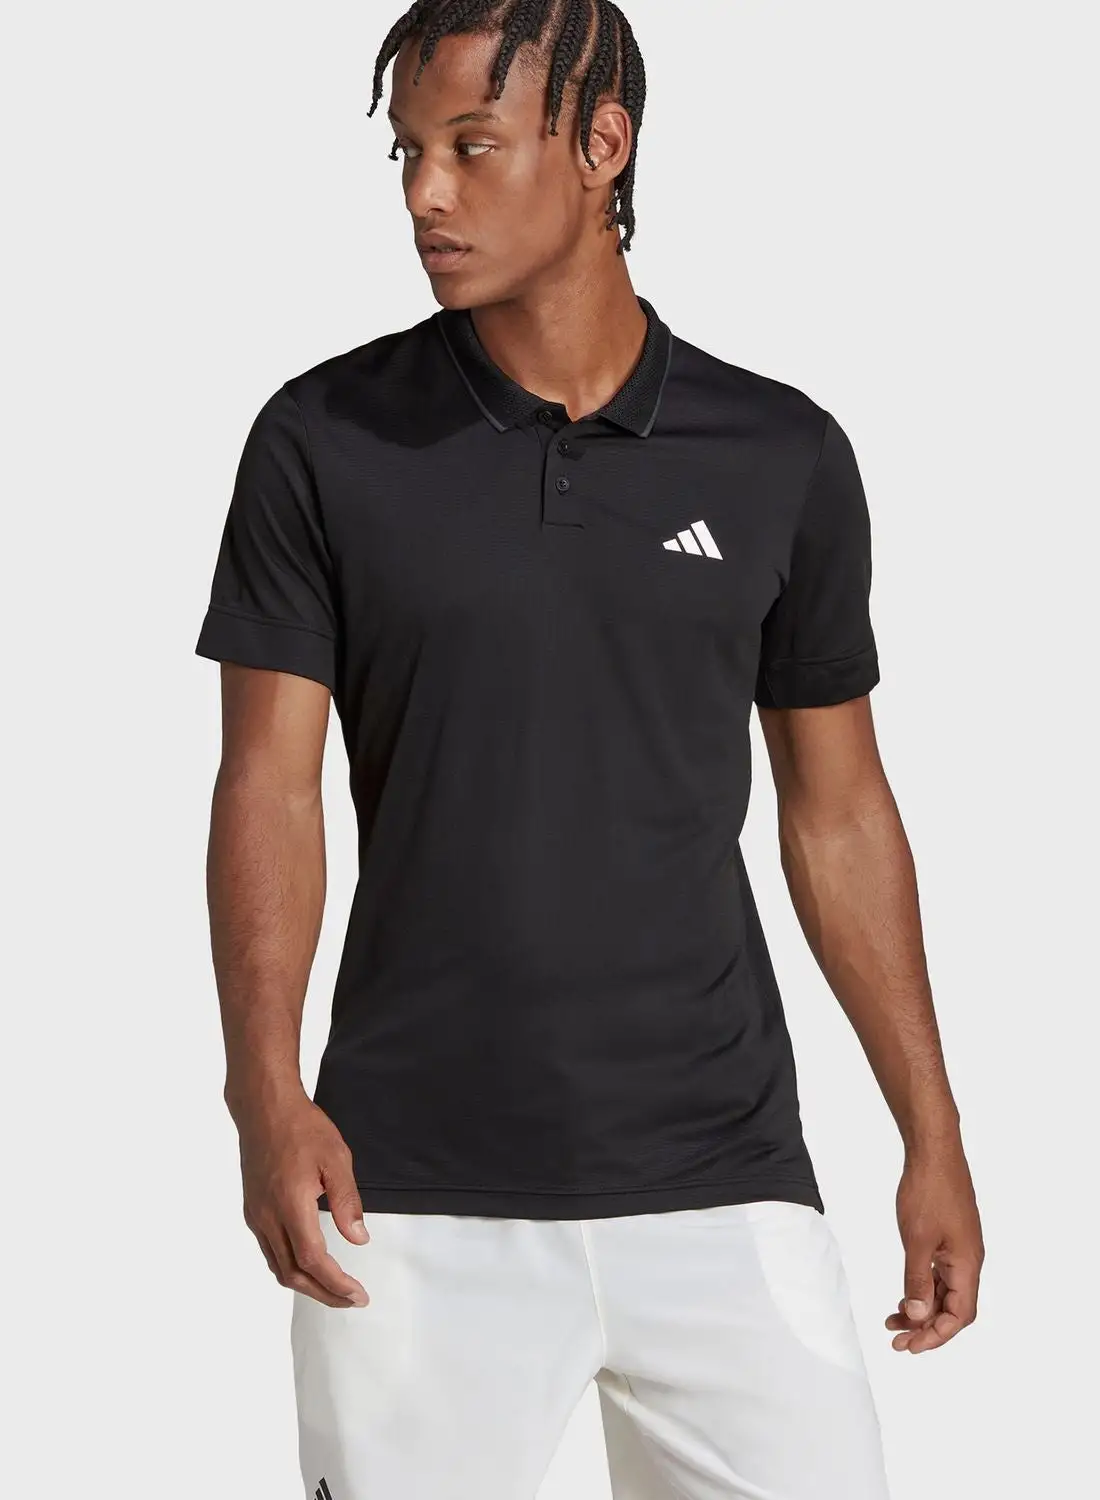 Adidas Tennis Freelift Polo T-Shirt